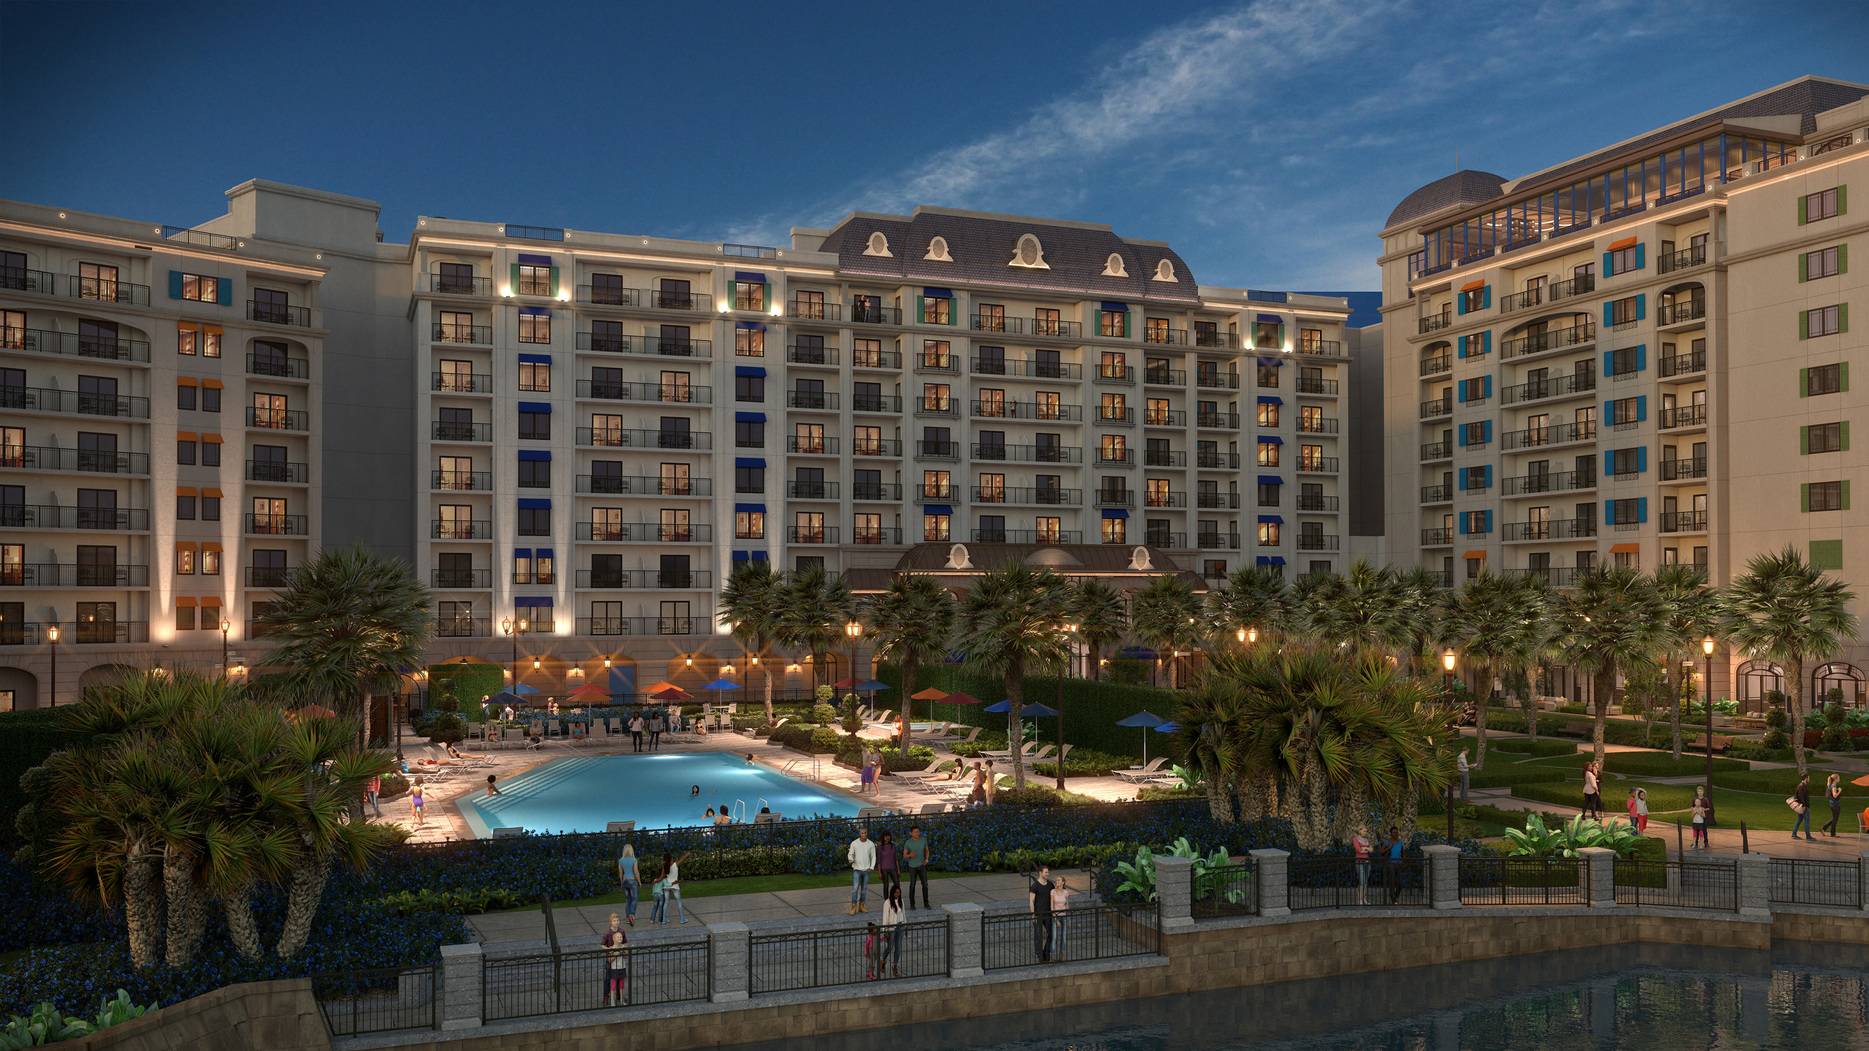 Disney Riviera Resort concept art - Beau Soleil quiet pool